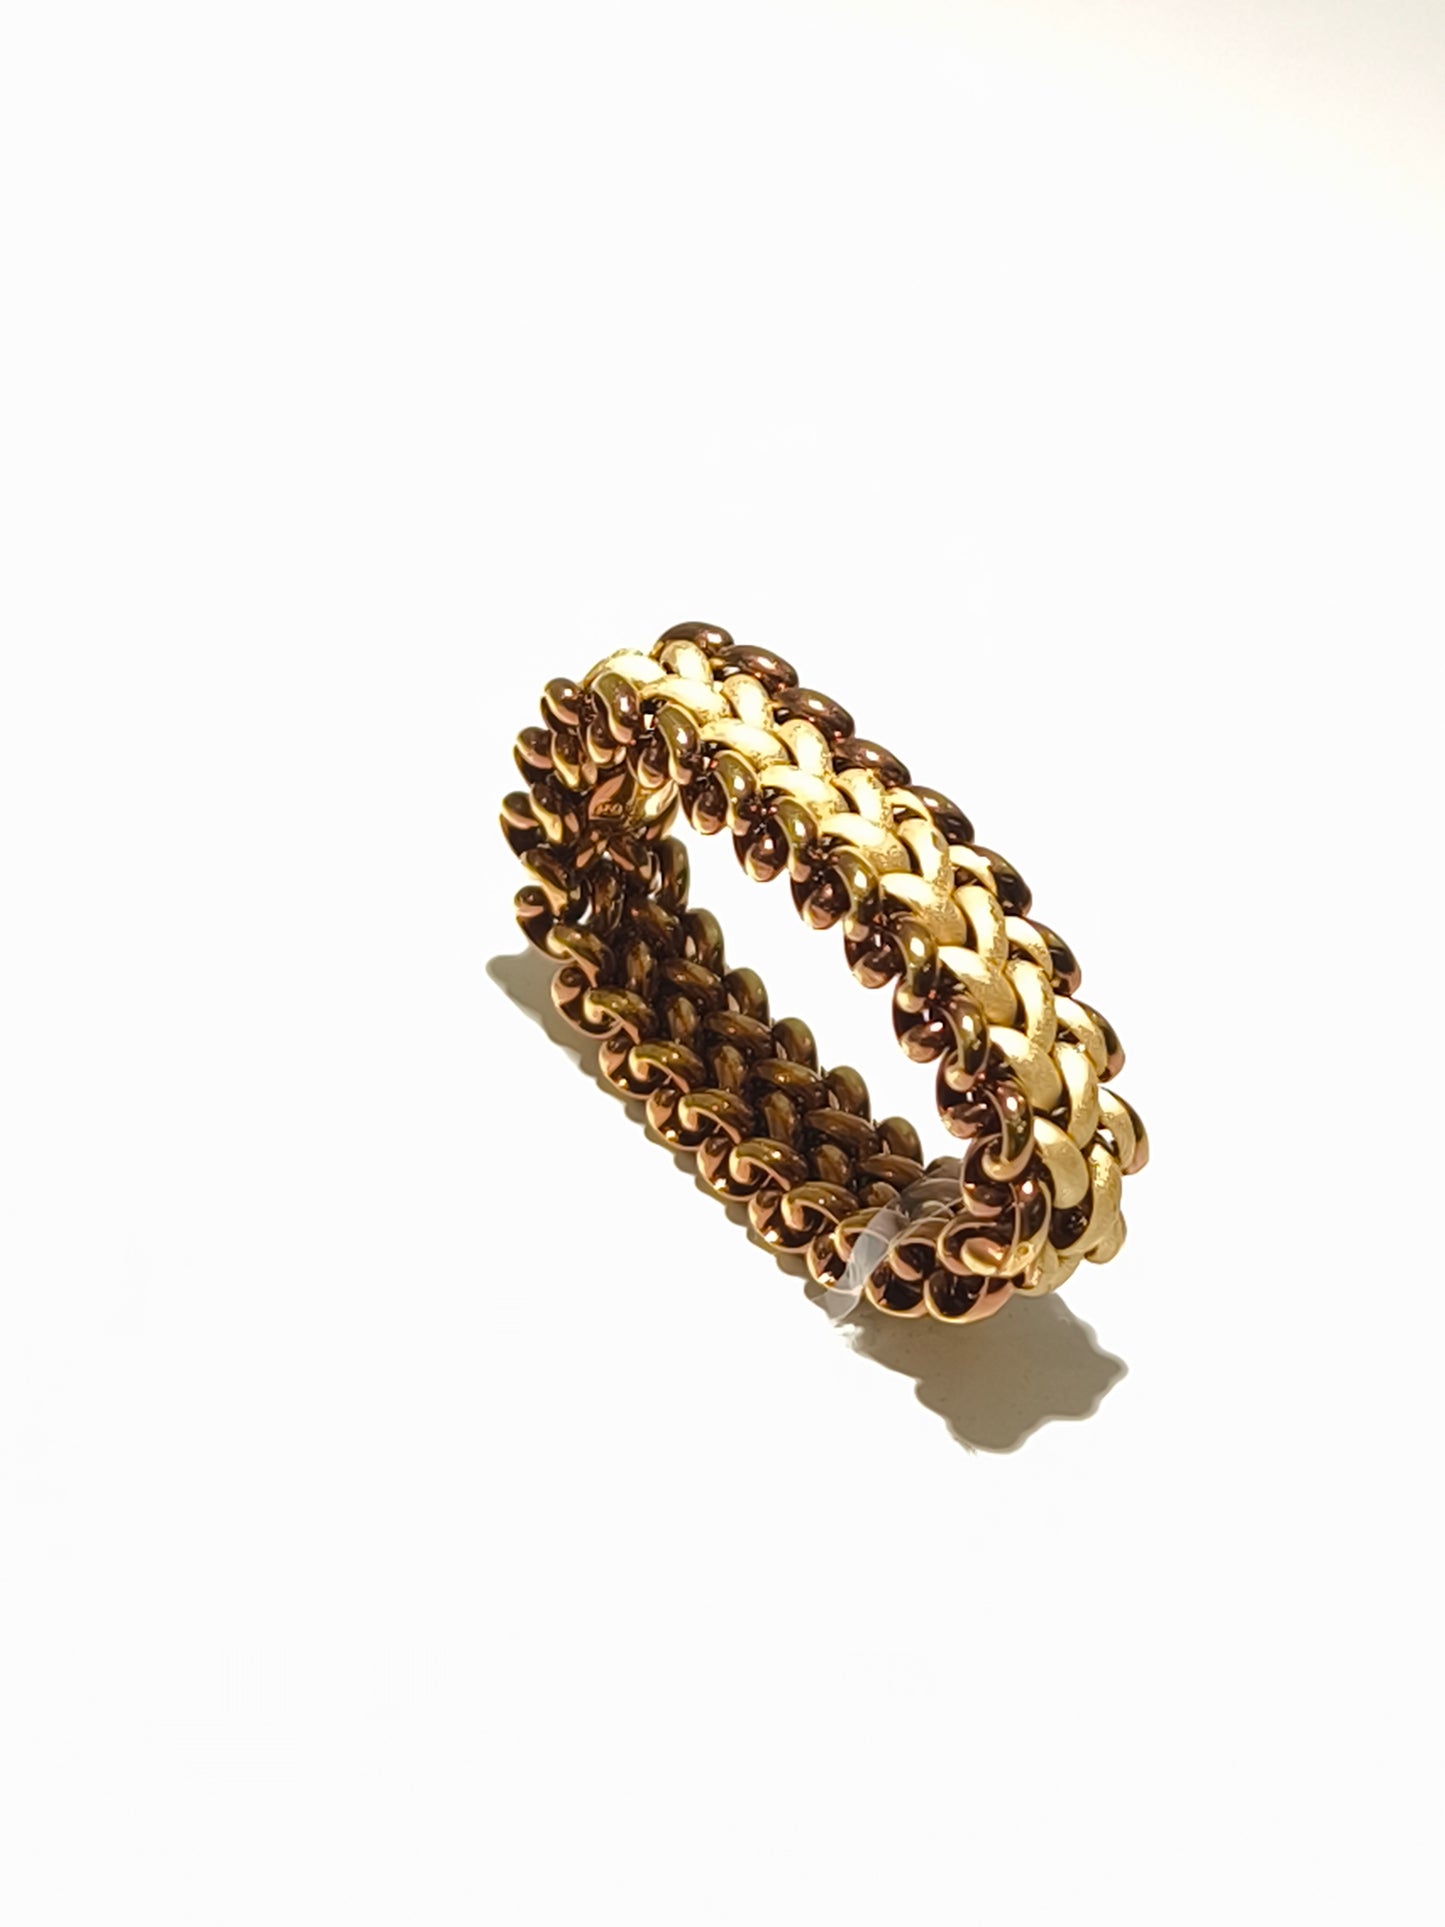 Chocolate gold mesh gold ring